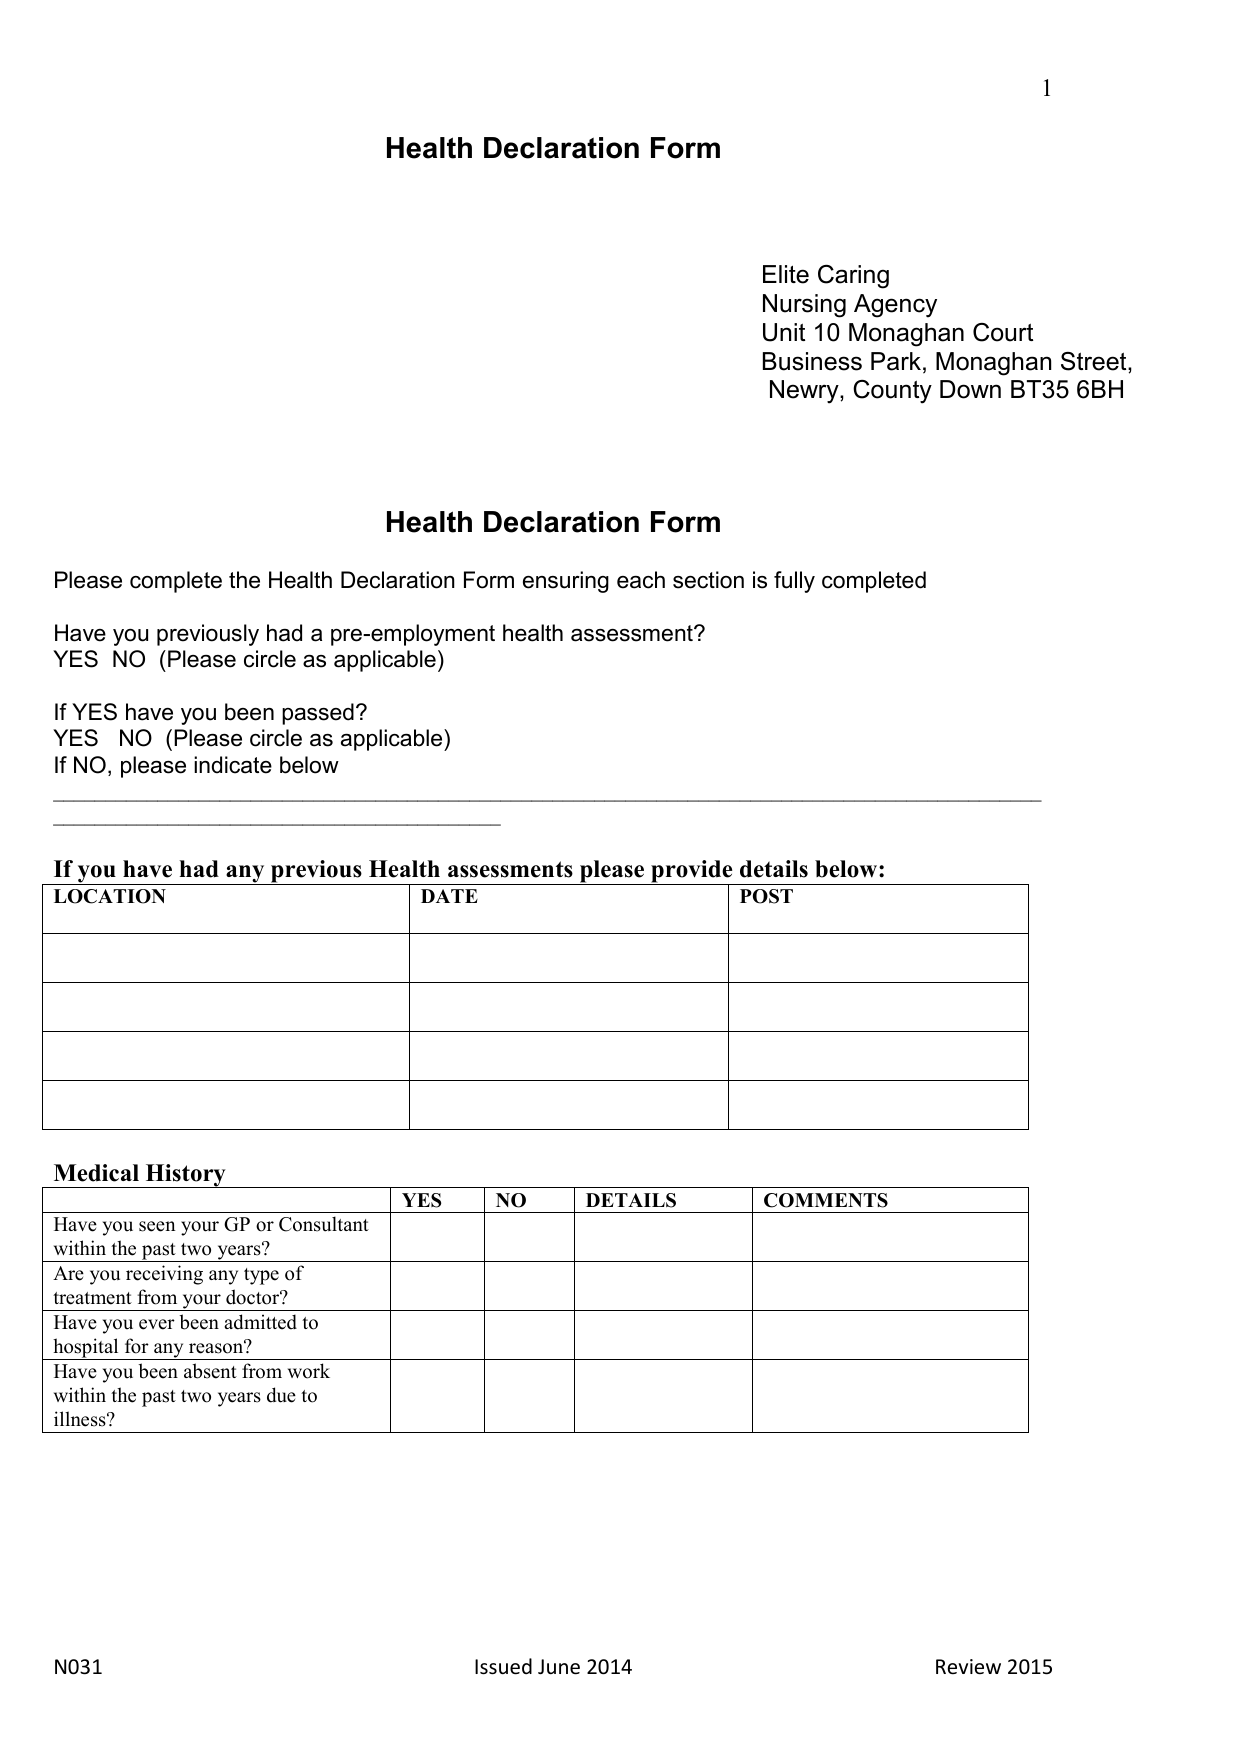 26 pdf HEALTH DECLARATION FORM PRINTABLE HD DOCX DOWNLOAD ZIP